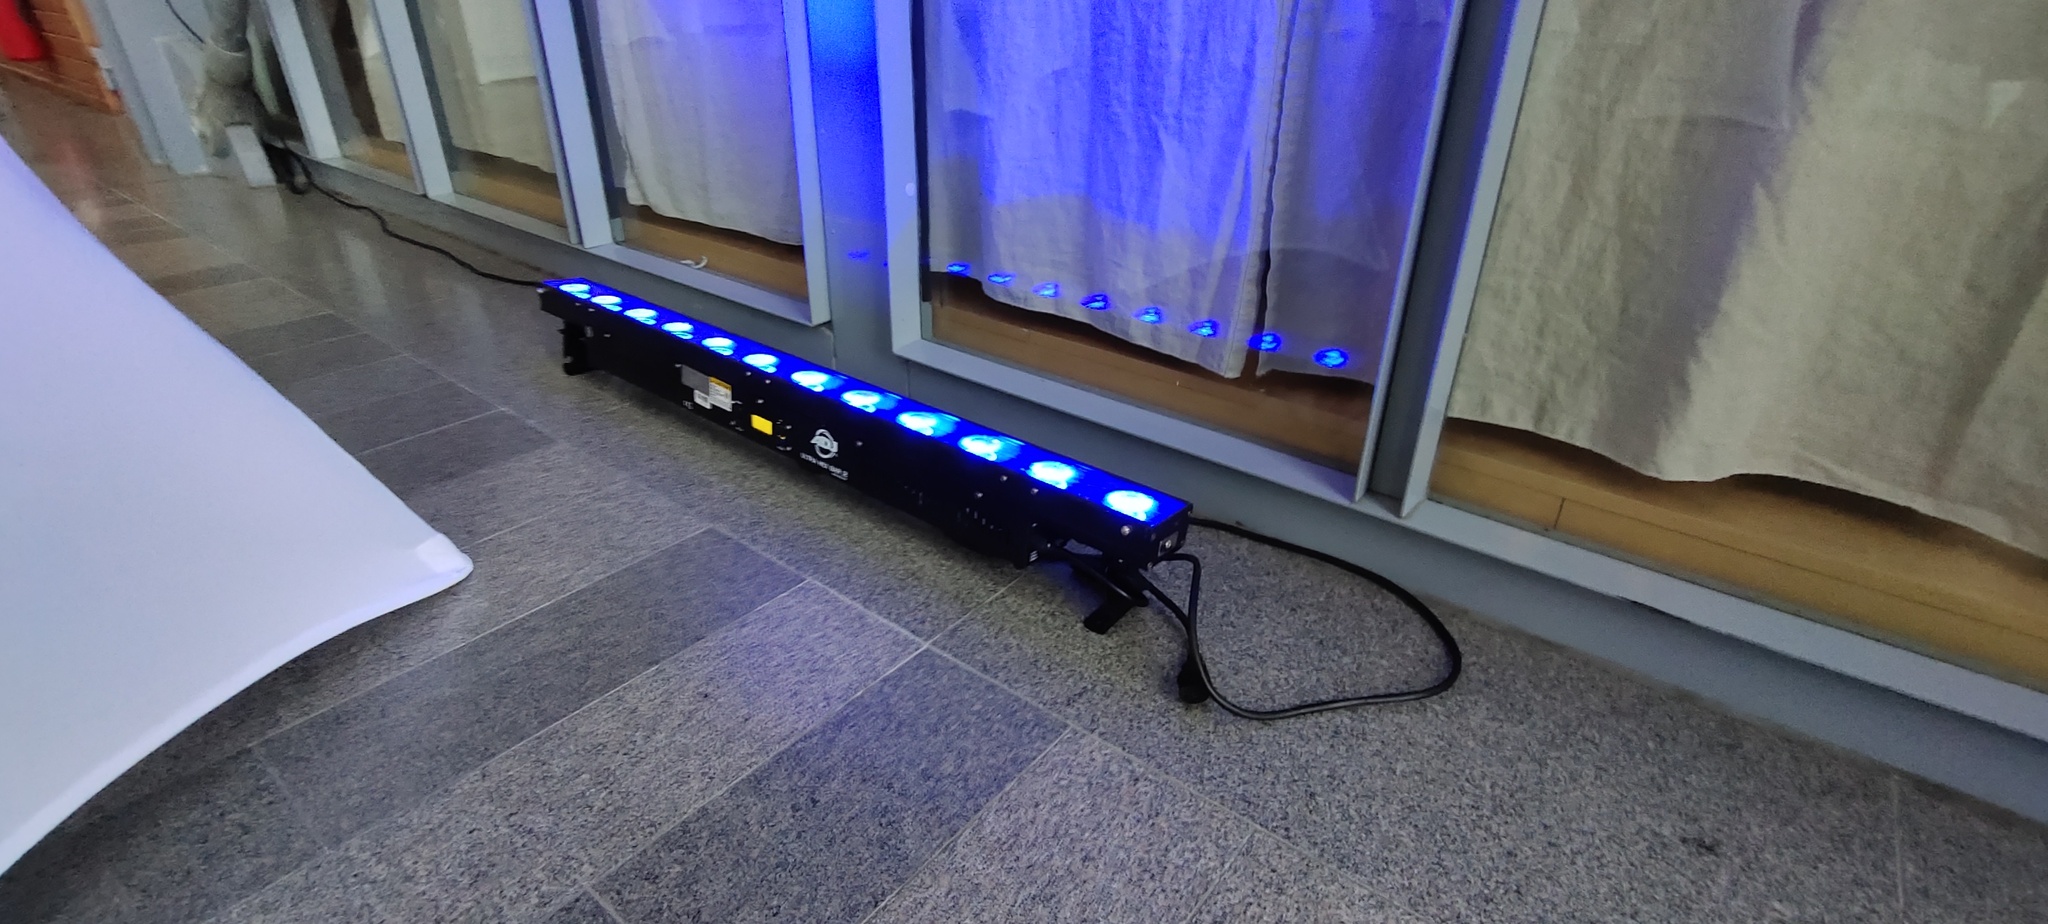 Hyr Mega Tri Bar 18 x LEDs 3W - 1 meter